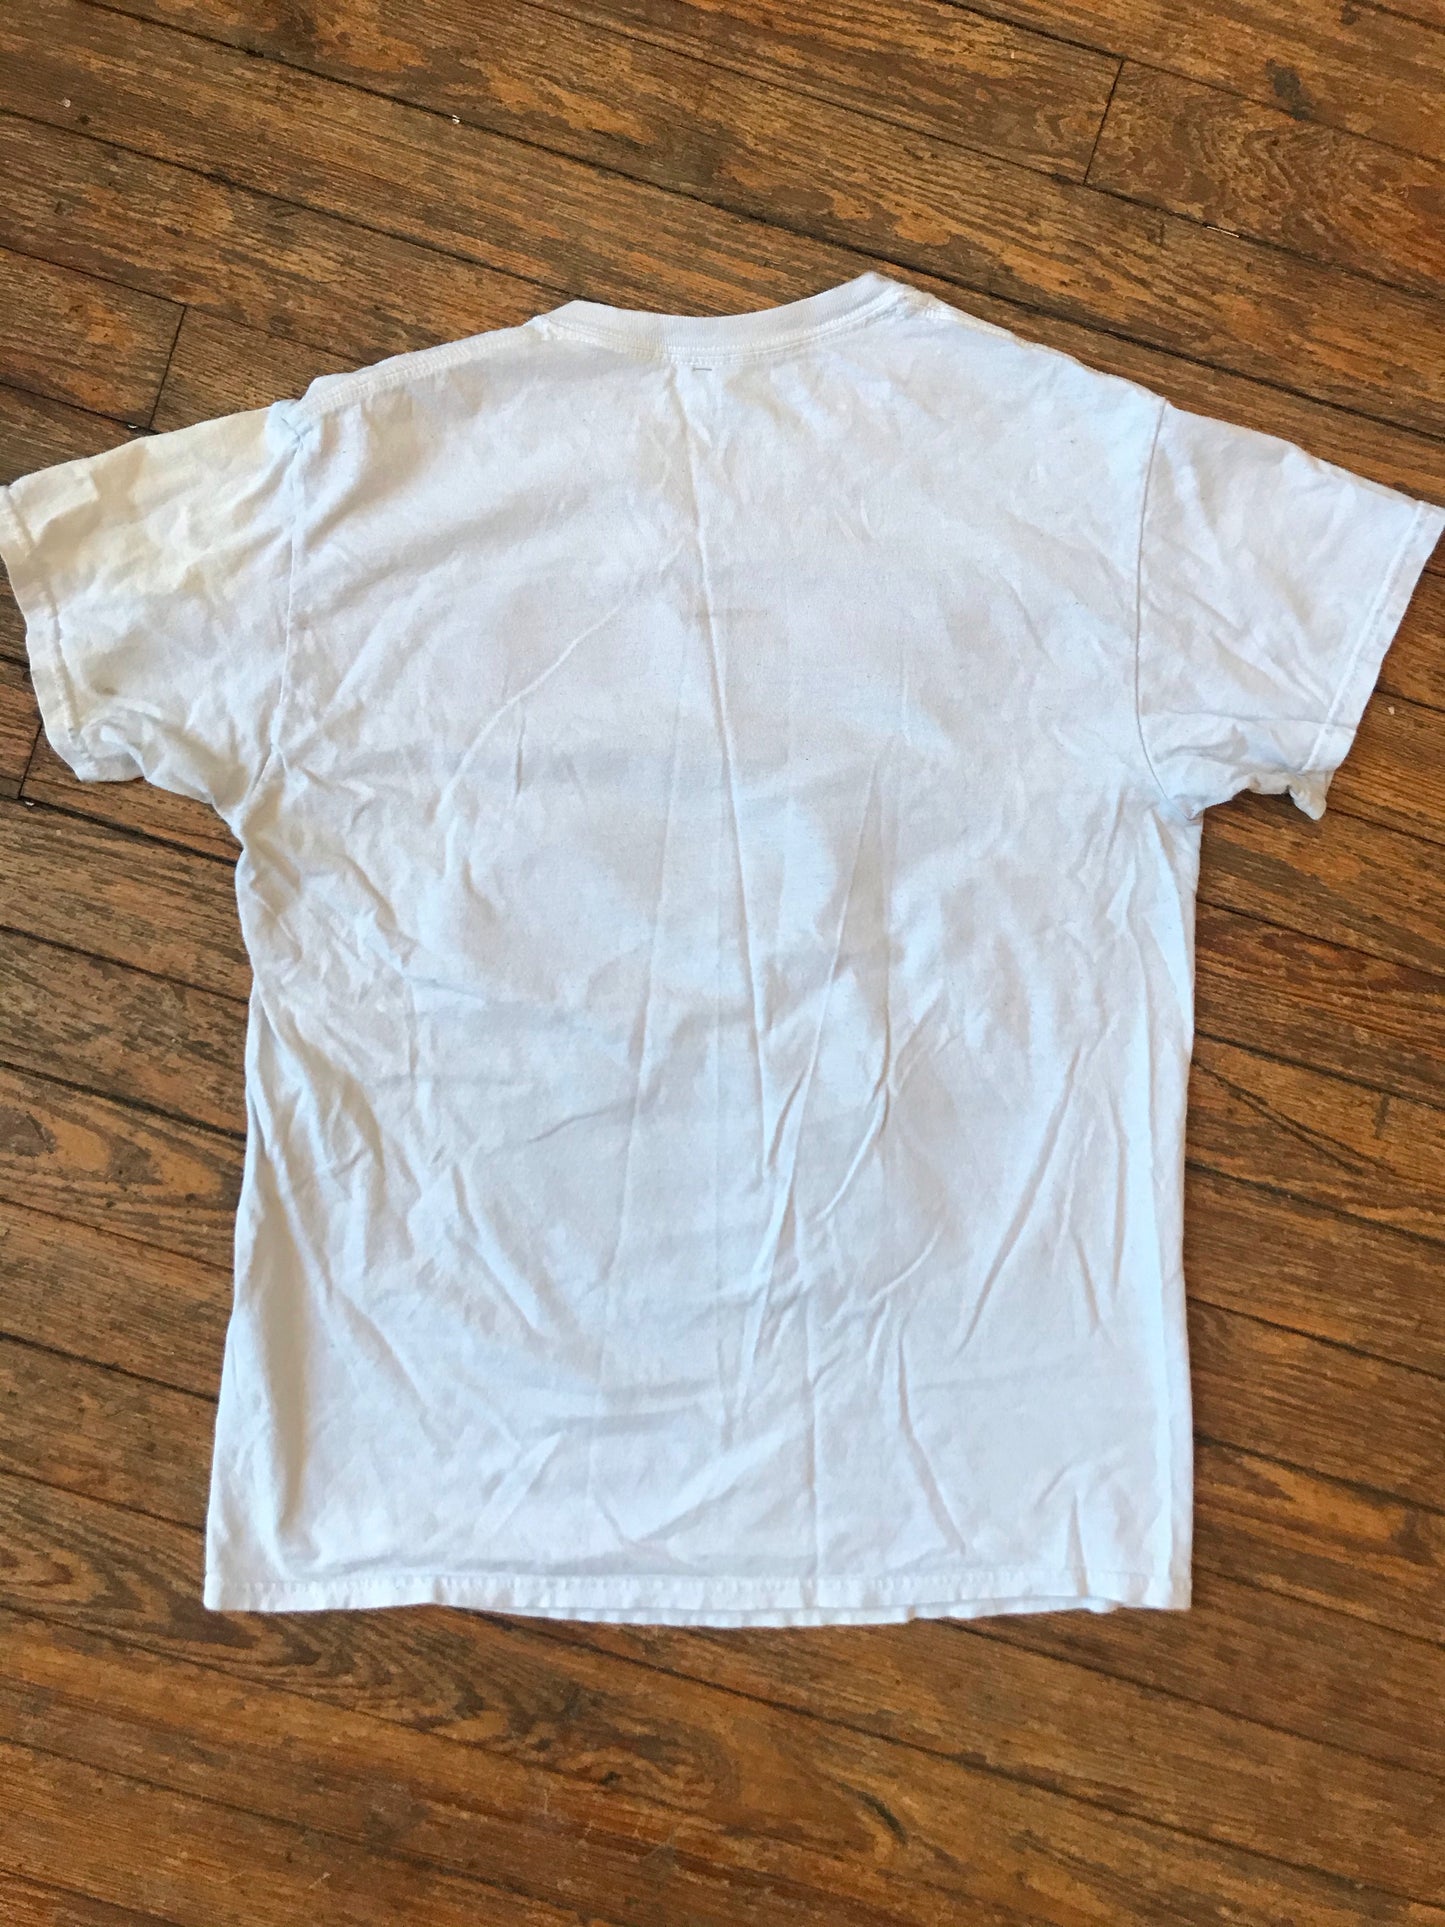 Ramones Surfin’ Bird T-Shirt